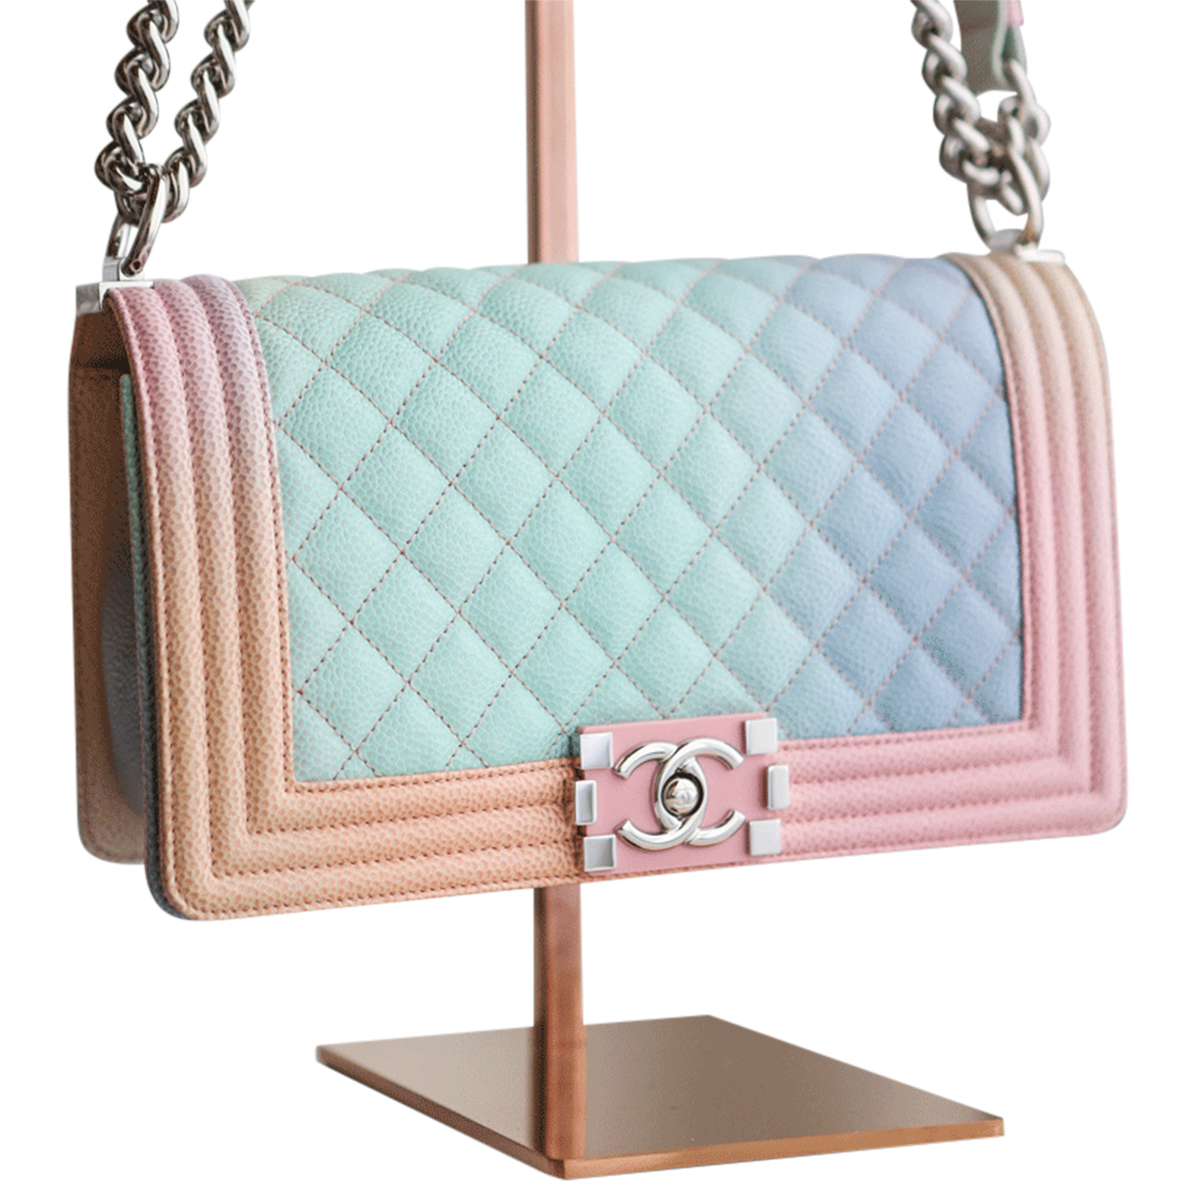 Small Boy Bag  Luxury Fashion Rentals  Rent a Chanel Handbag